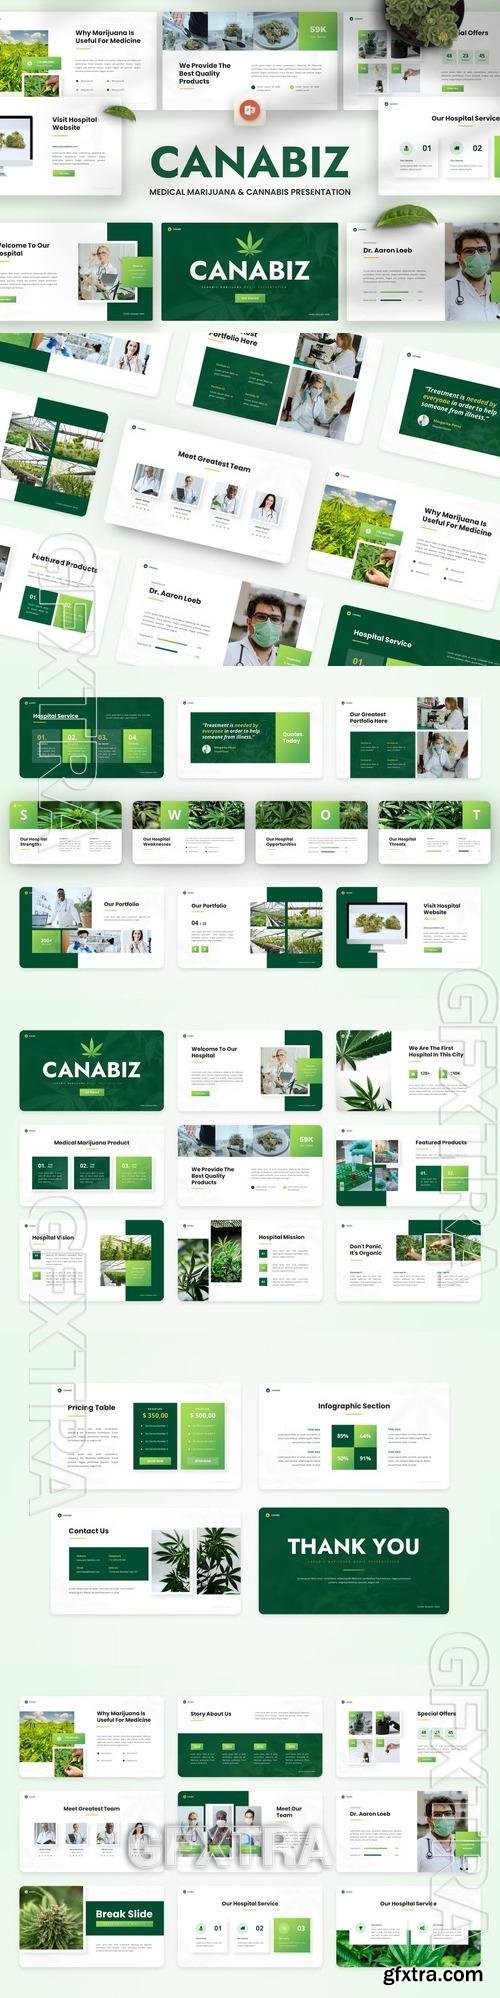 Canabiz - Medical Marijuana & Cannabis Powerpoint YDKQ2JU